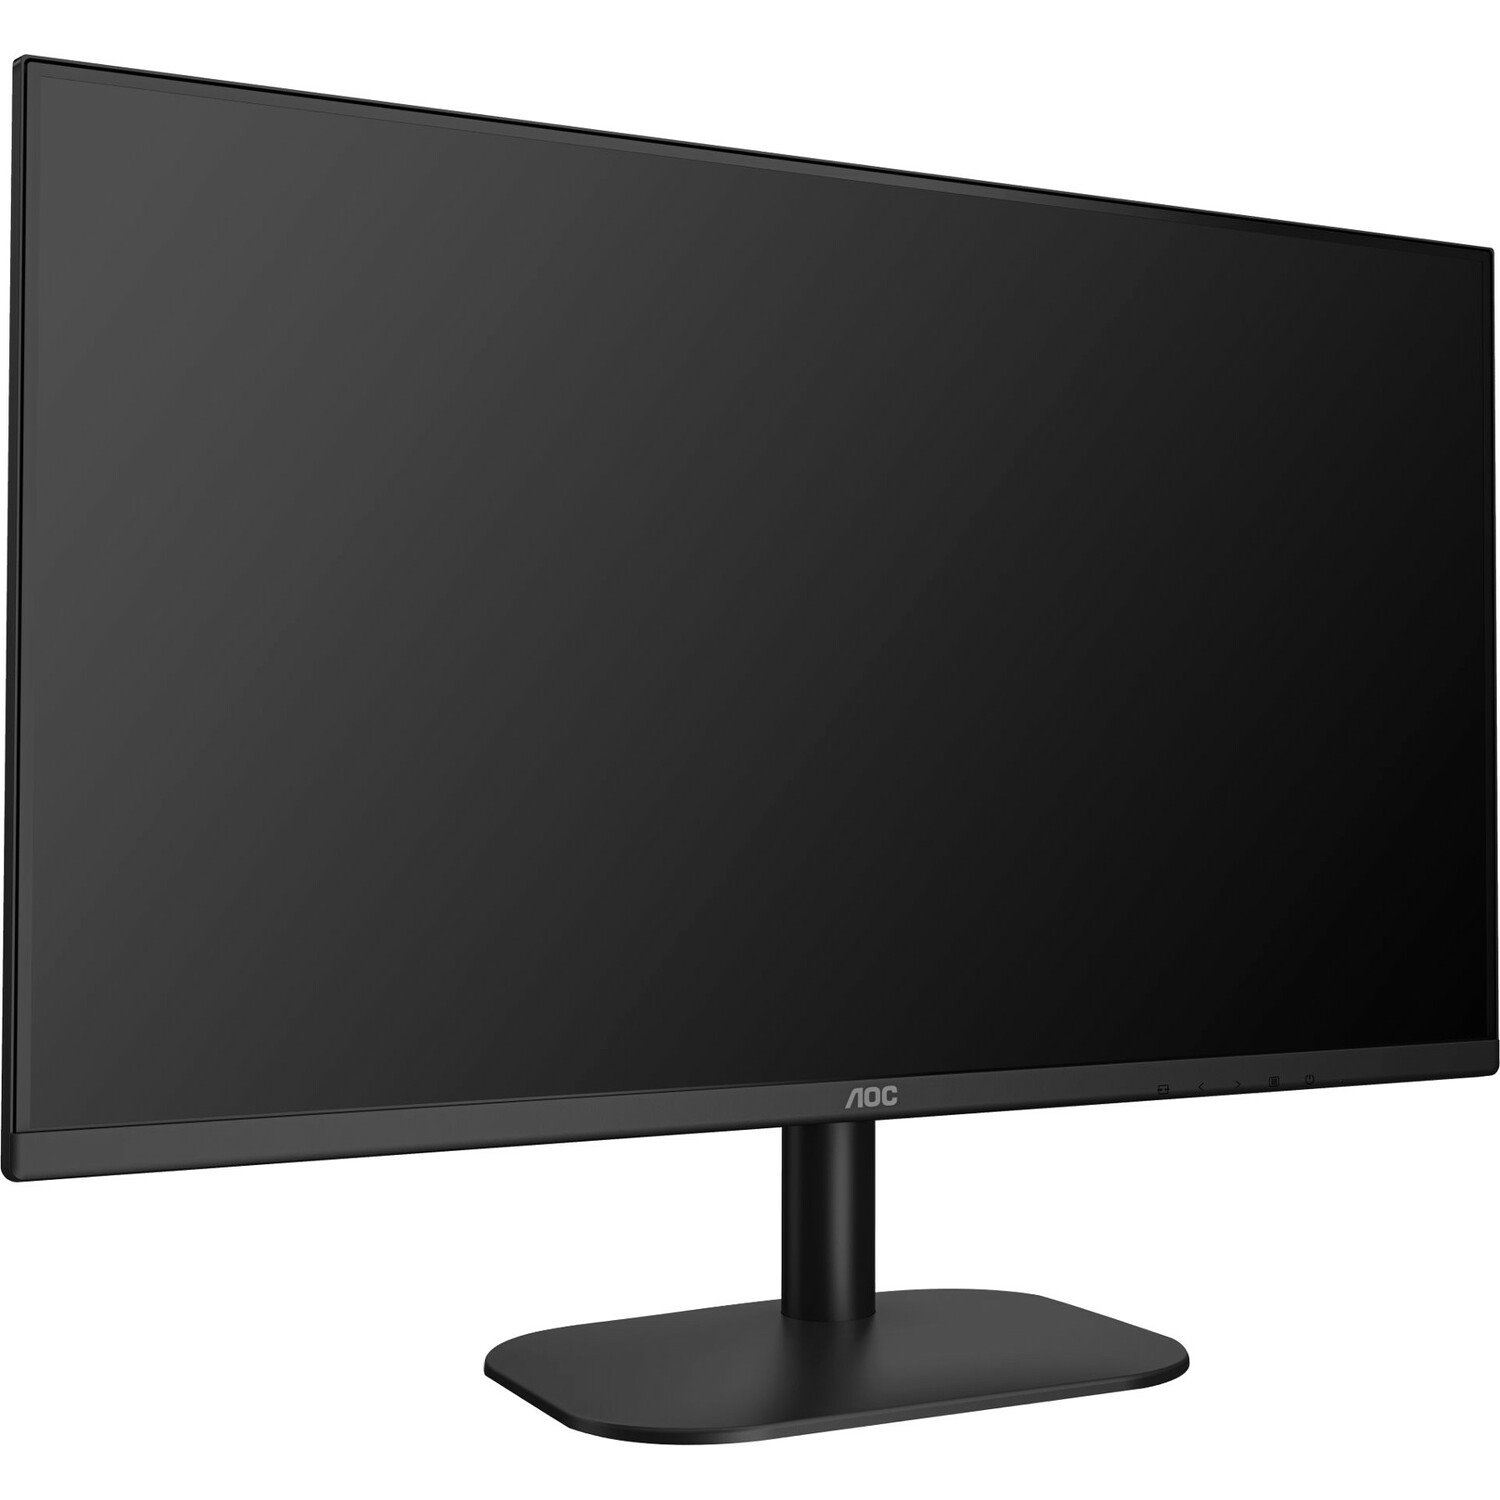 AOC 24B2XH 23.8" Full HD WLED LCD Monitor - 16:9 - Black